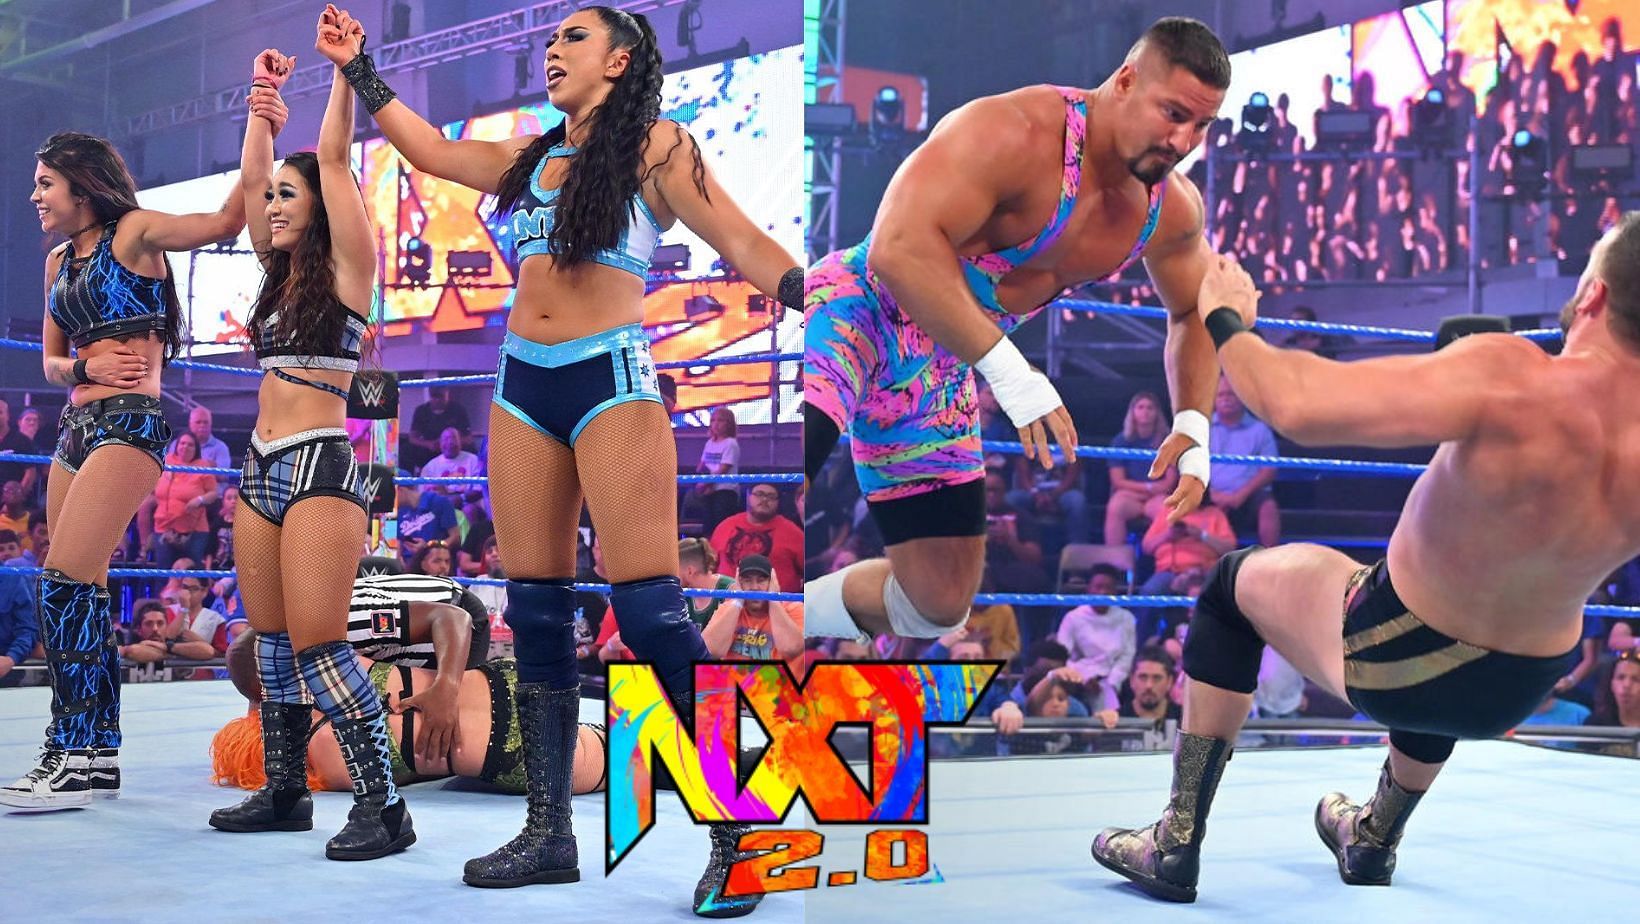 WWE NXT 2.0 saw a 6-woman tag team match main event